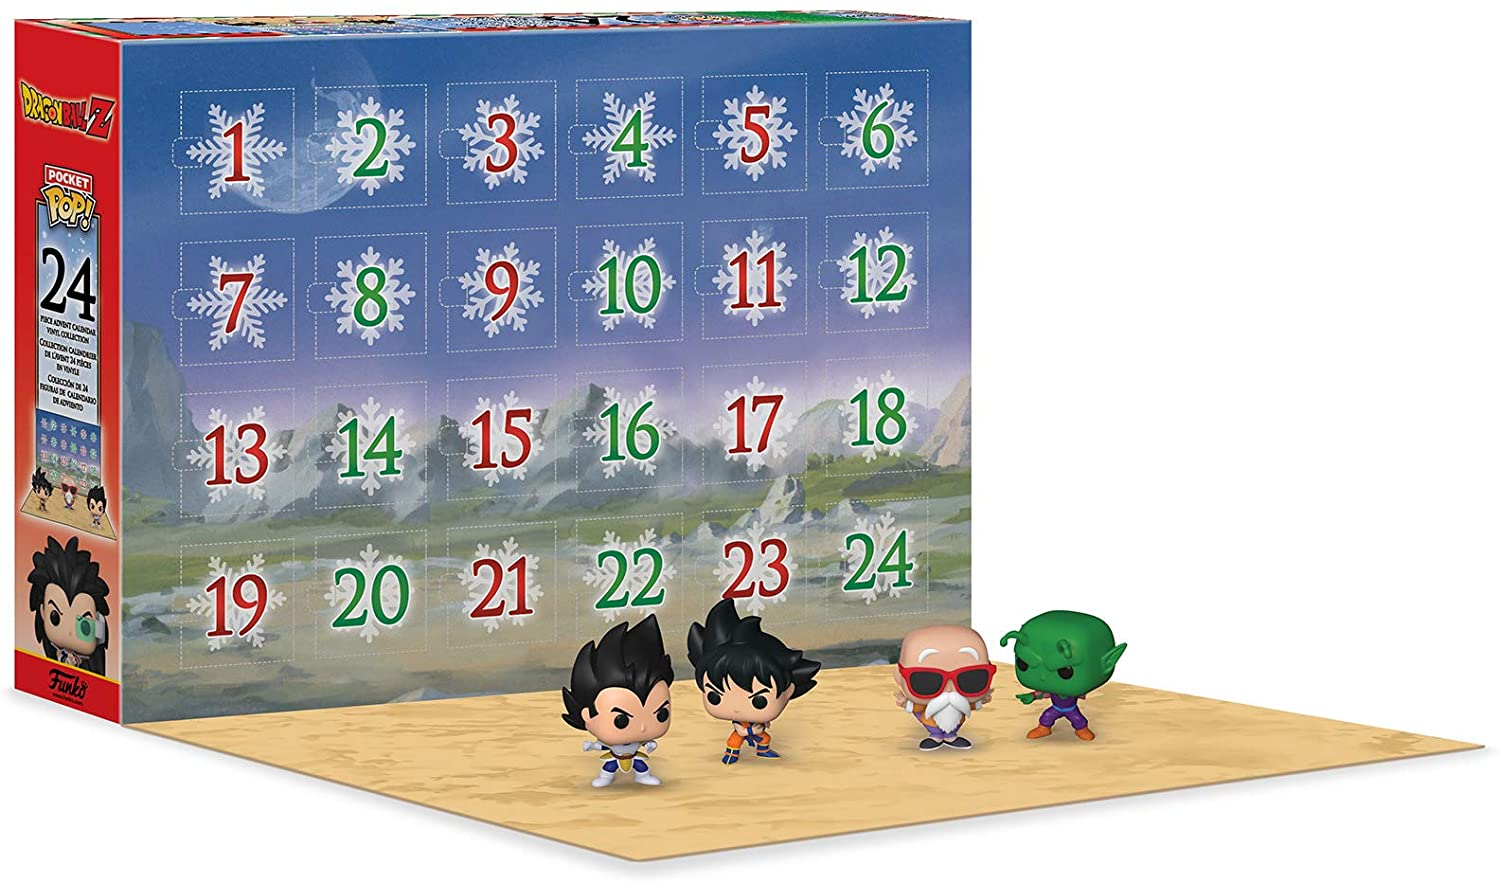 2020 Funko Dragon Ball Z Advent Calendar Available For Pre-Order Now